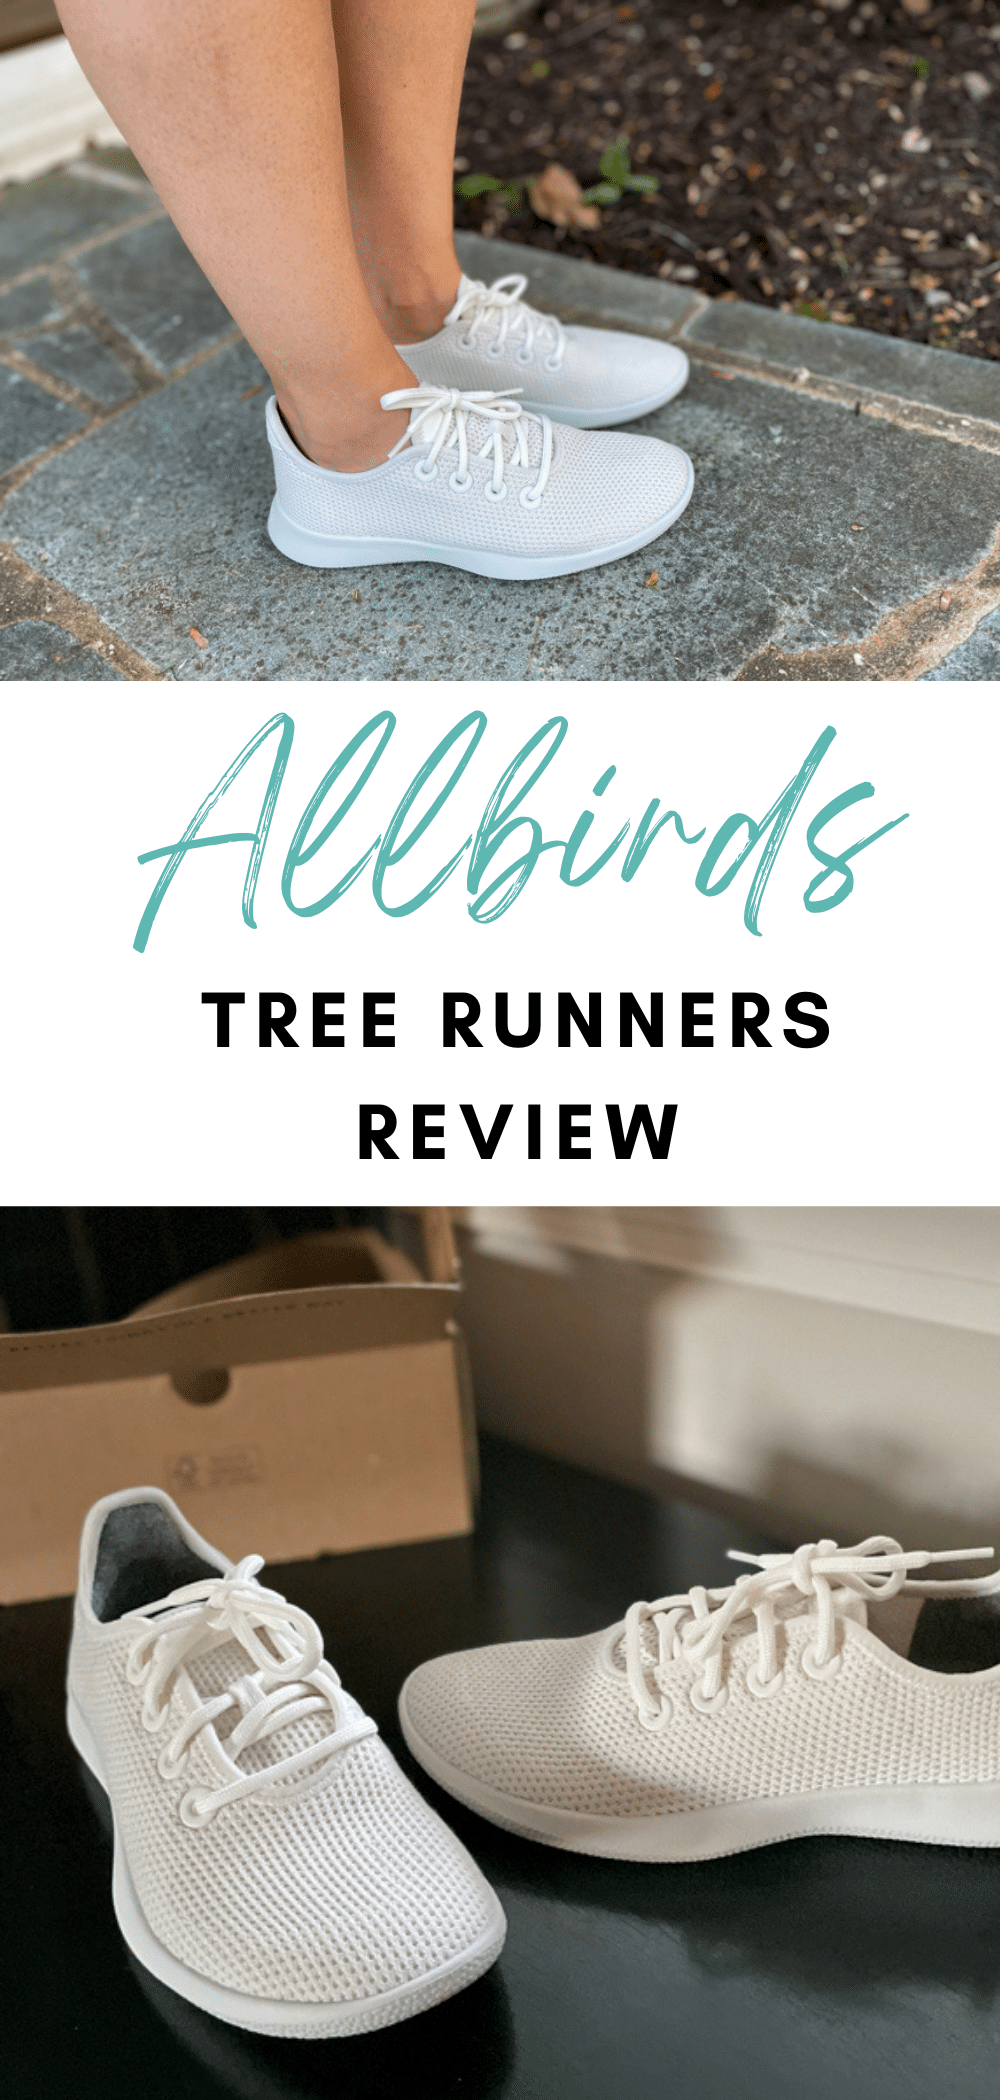 Allbirds Tree Runners Review – Kath Eats Real Food